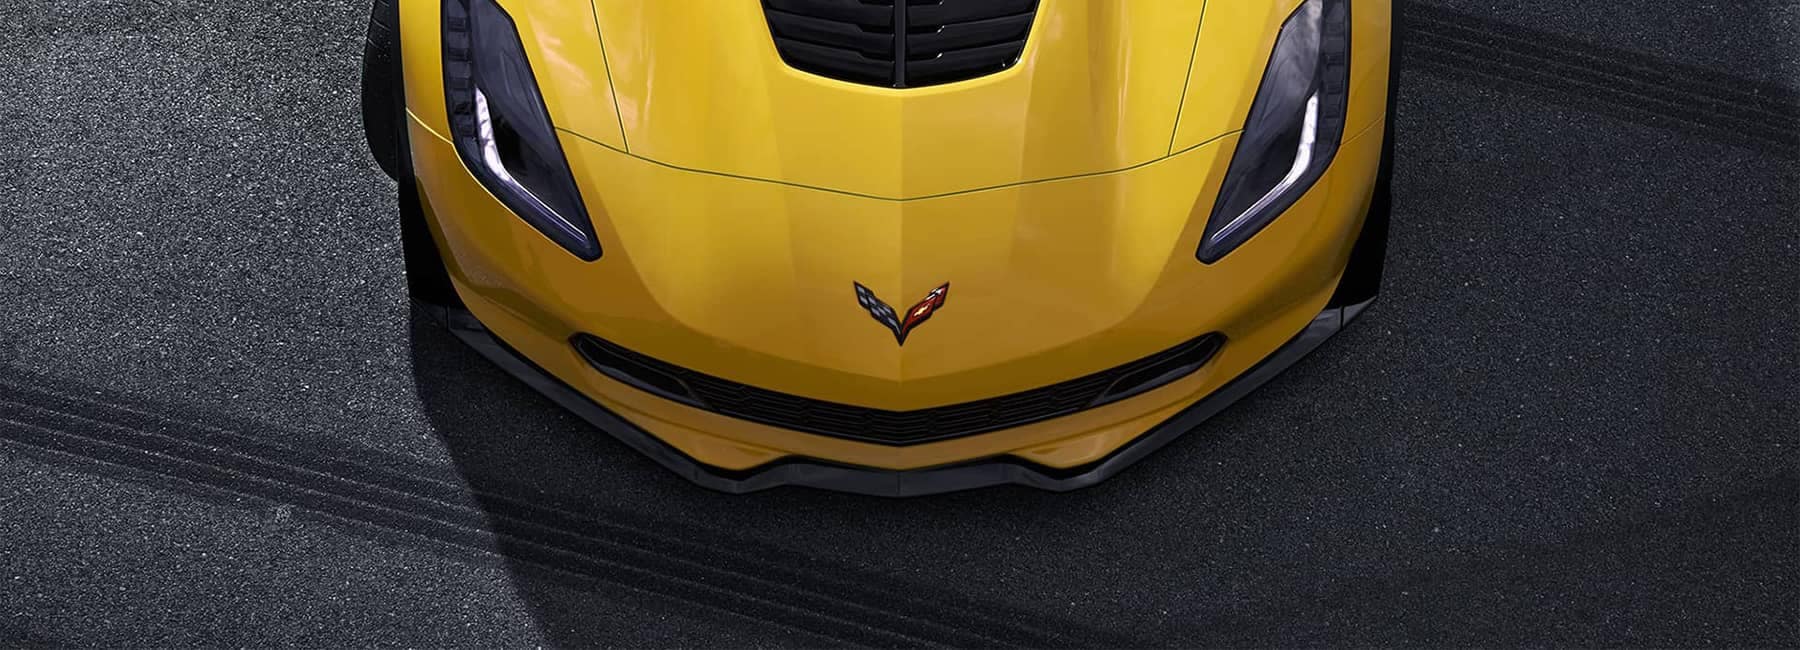 2019 Corvette Z06 Yellow Nose Top View